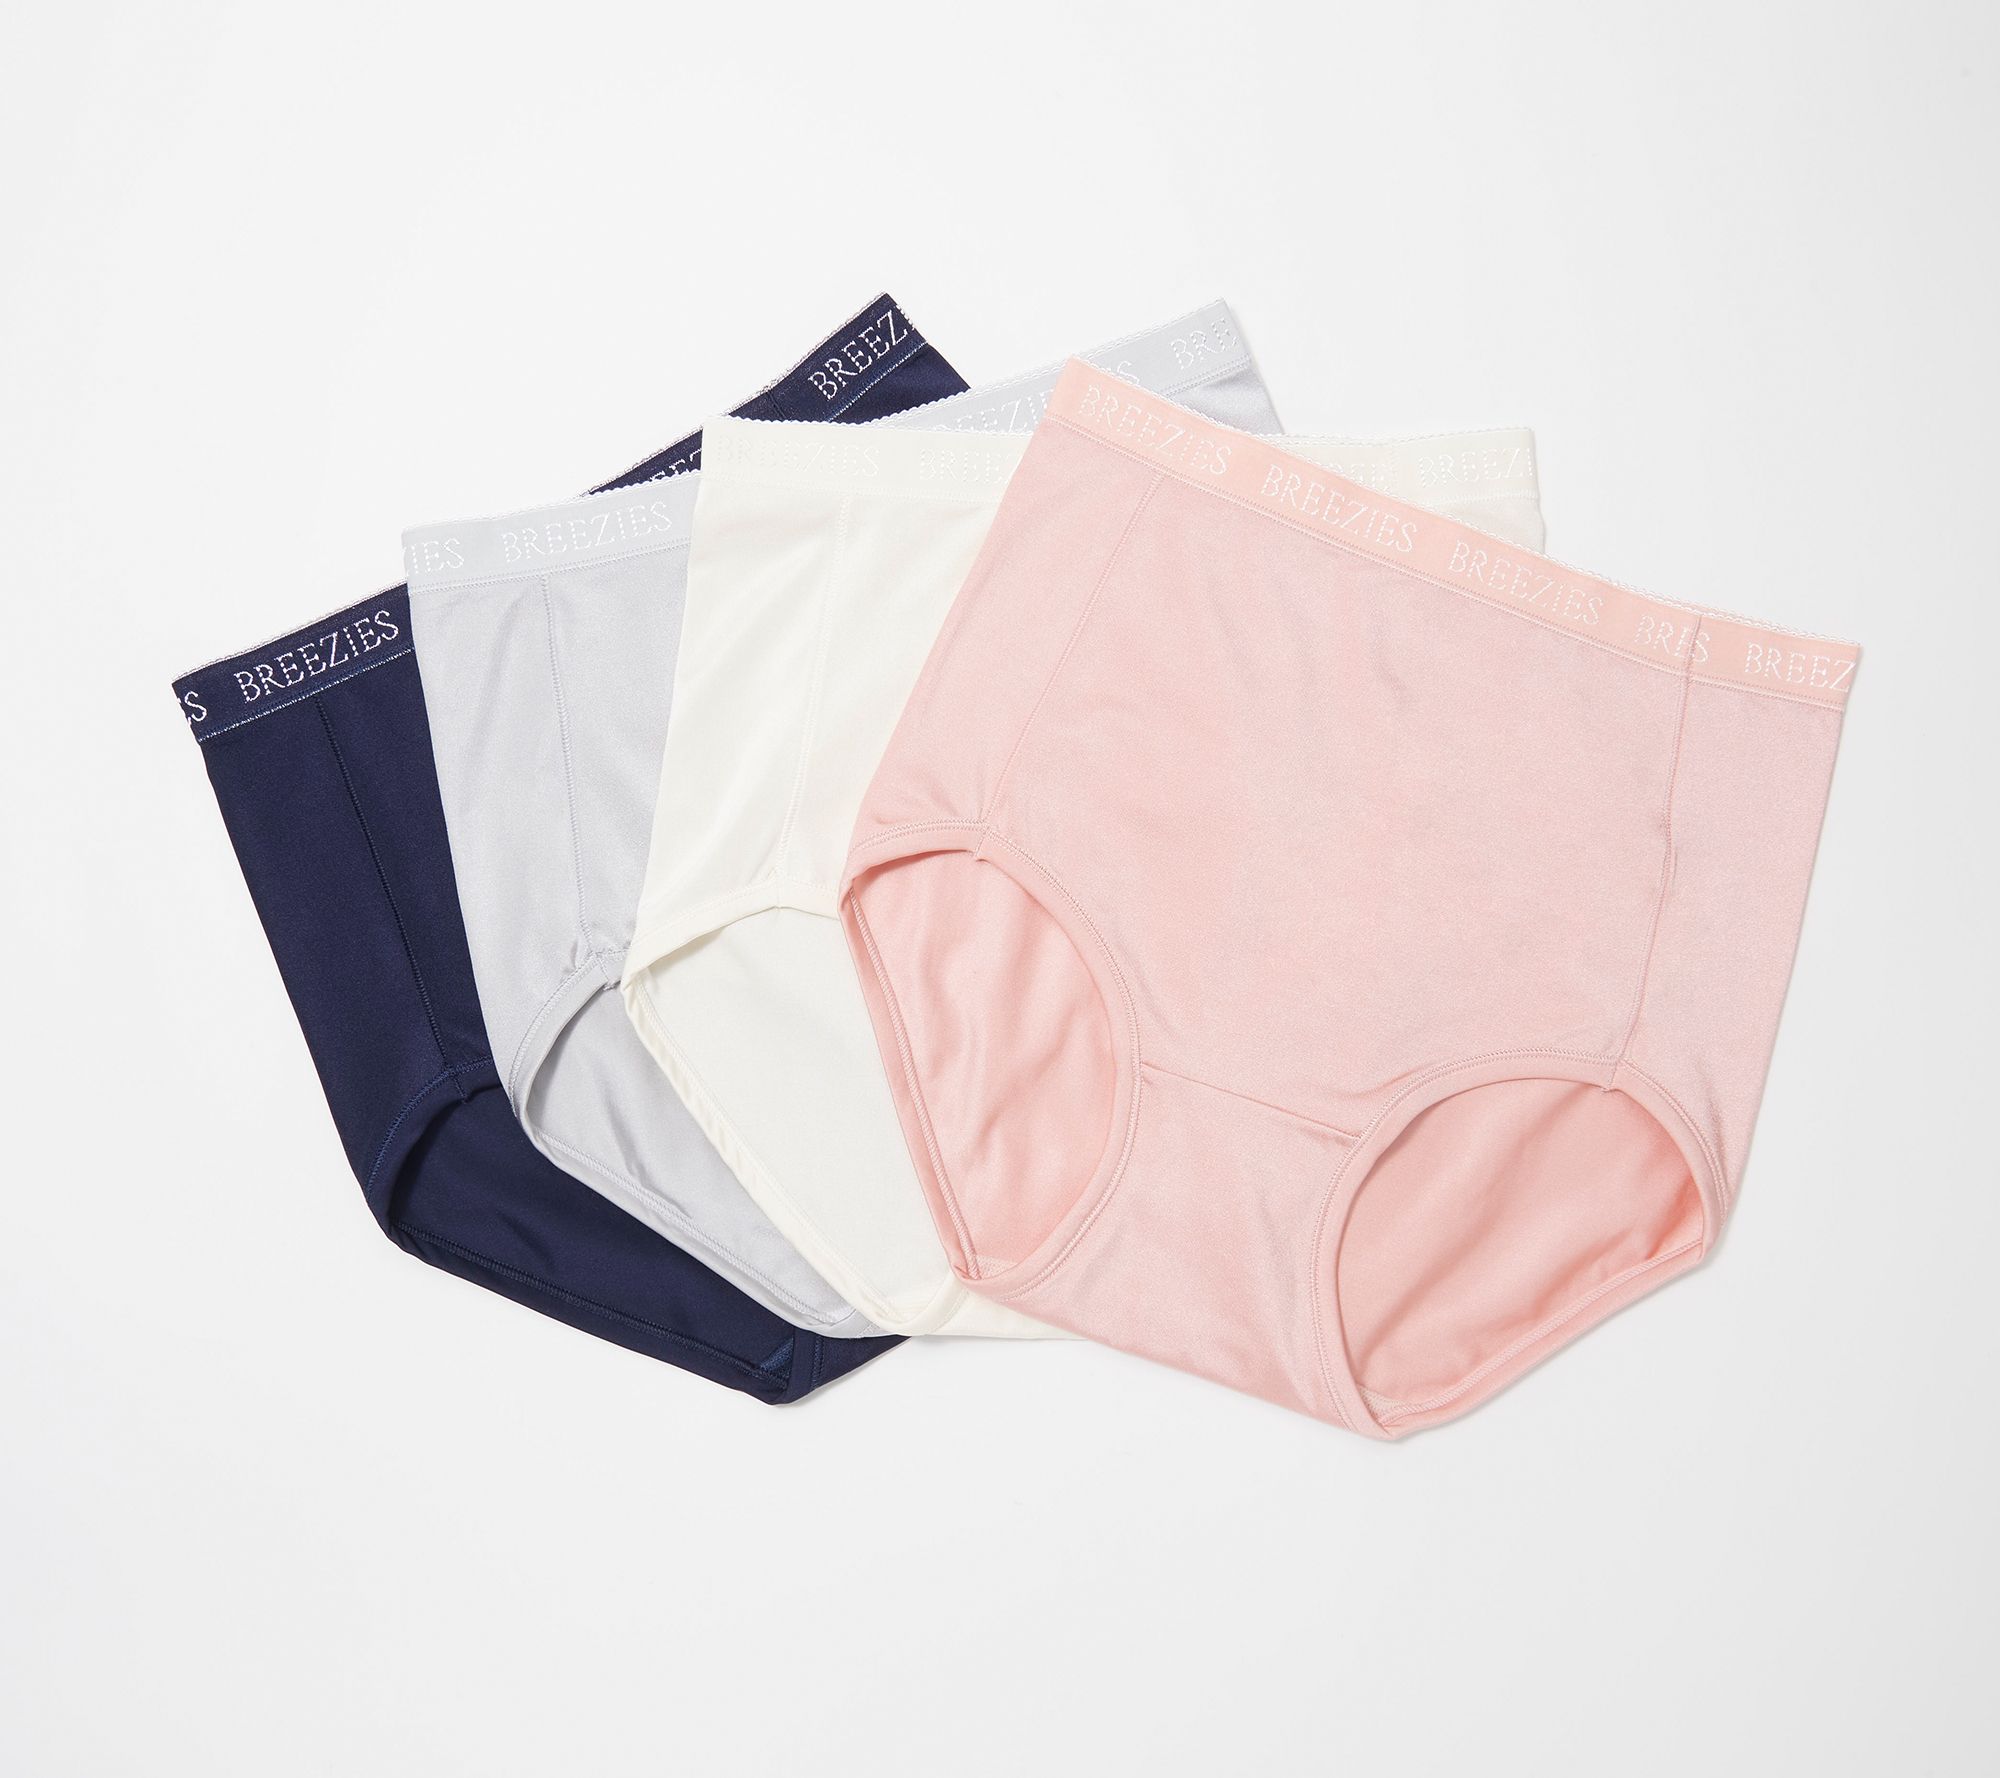 Breezies Set of 4 100% Nylon Full-Brief Panties Seashell Pink